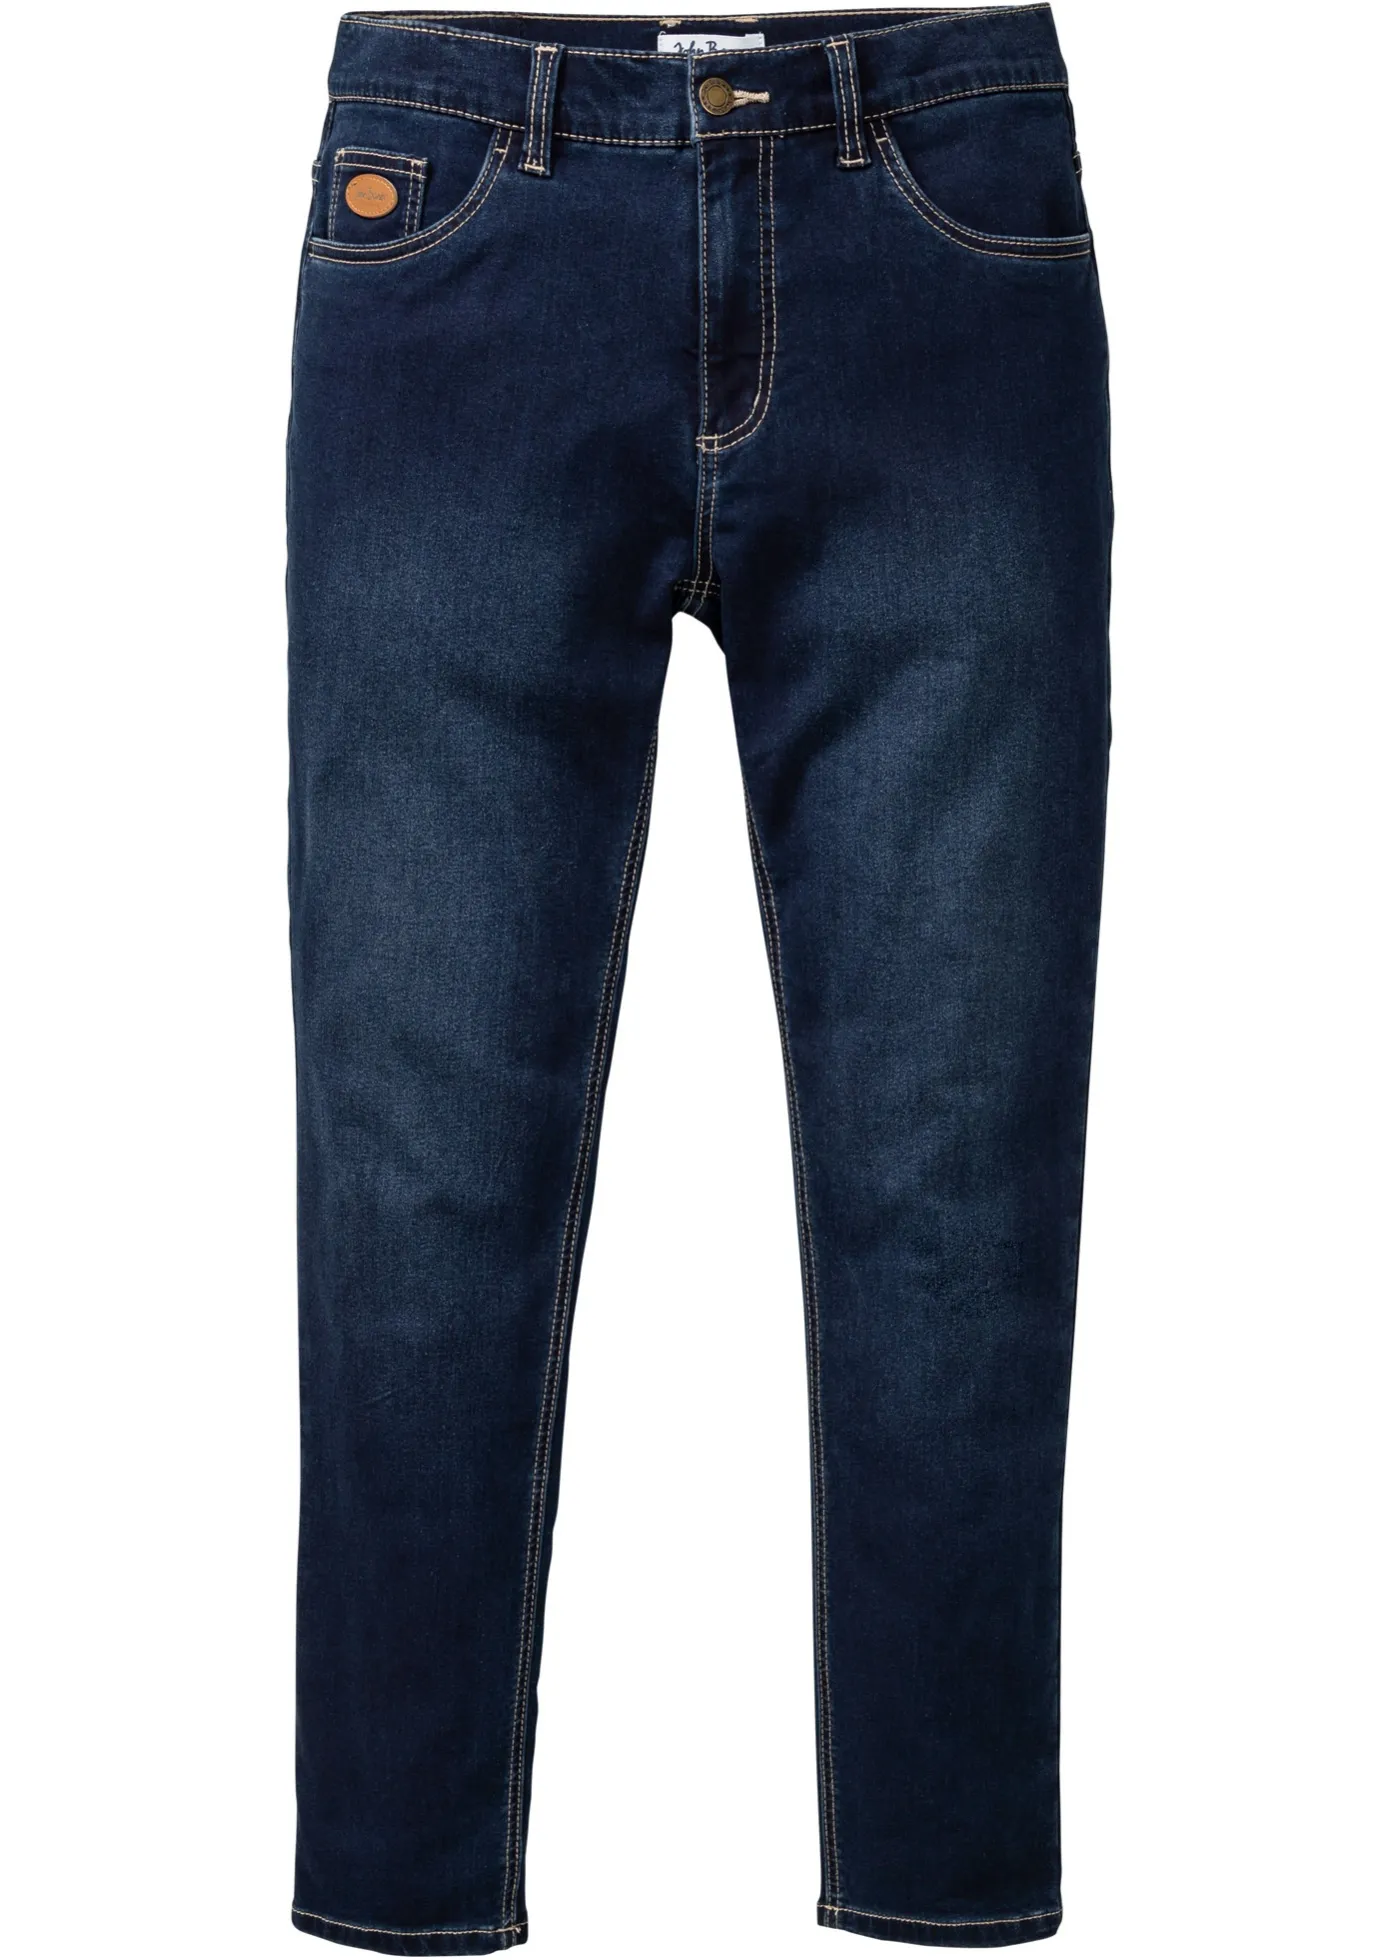 Jeans termici con taglio comfort slim fit, straight (Blu) - John Baner JEANSWEAR